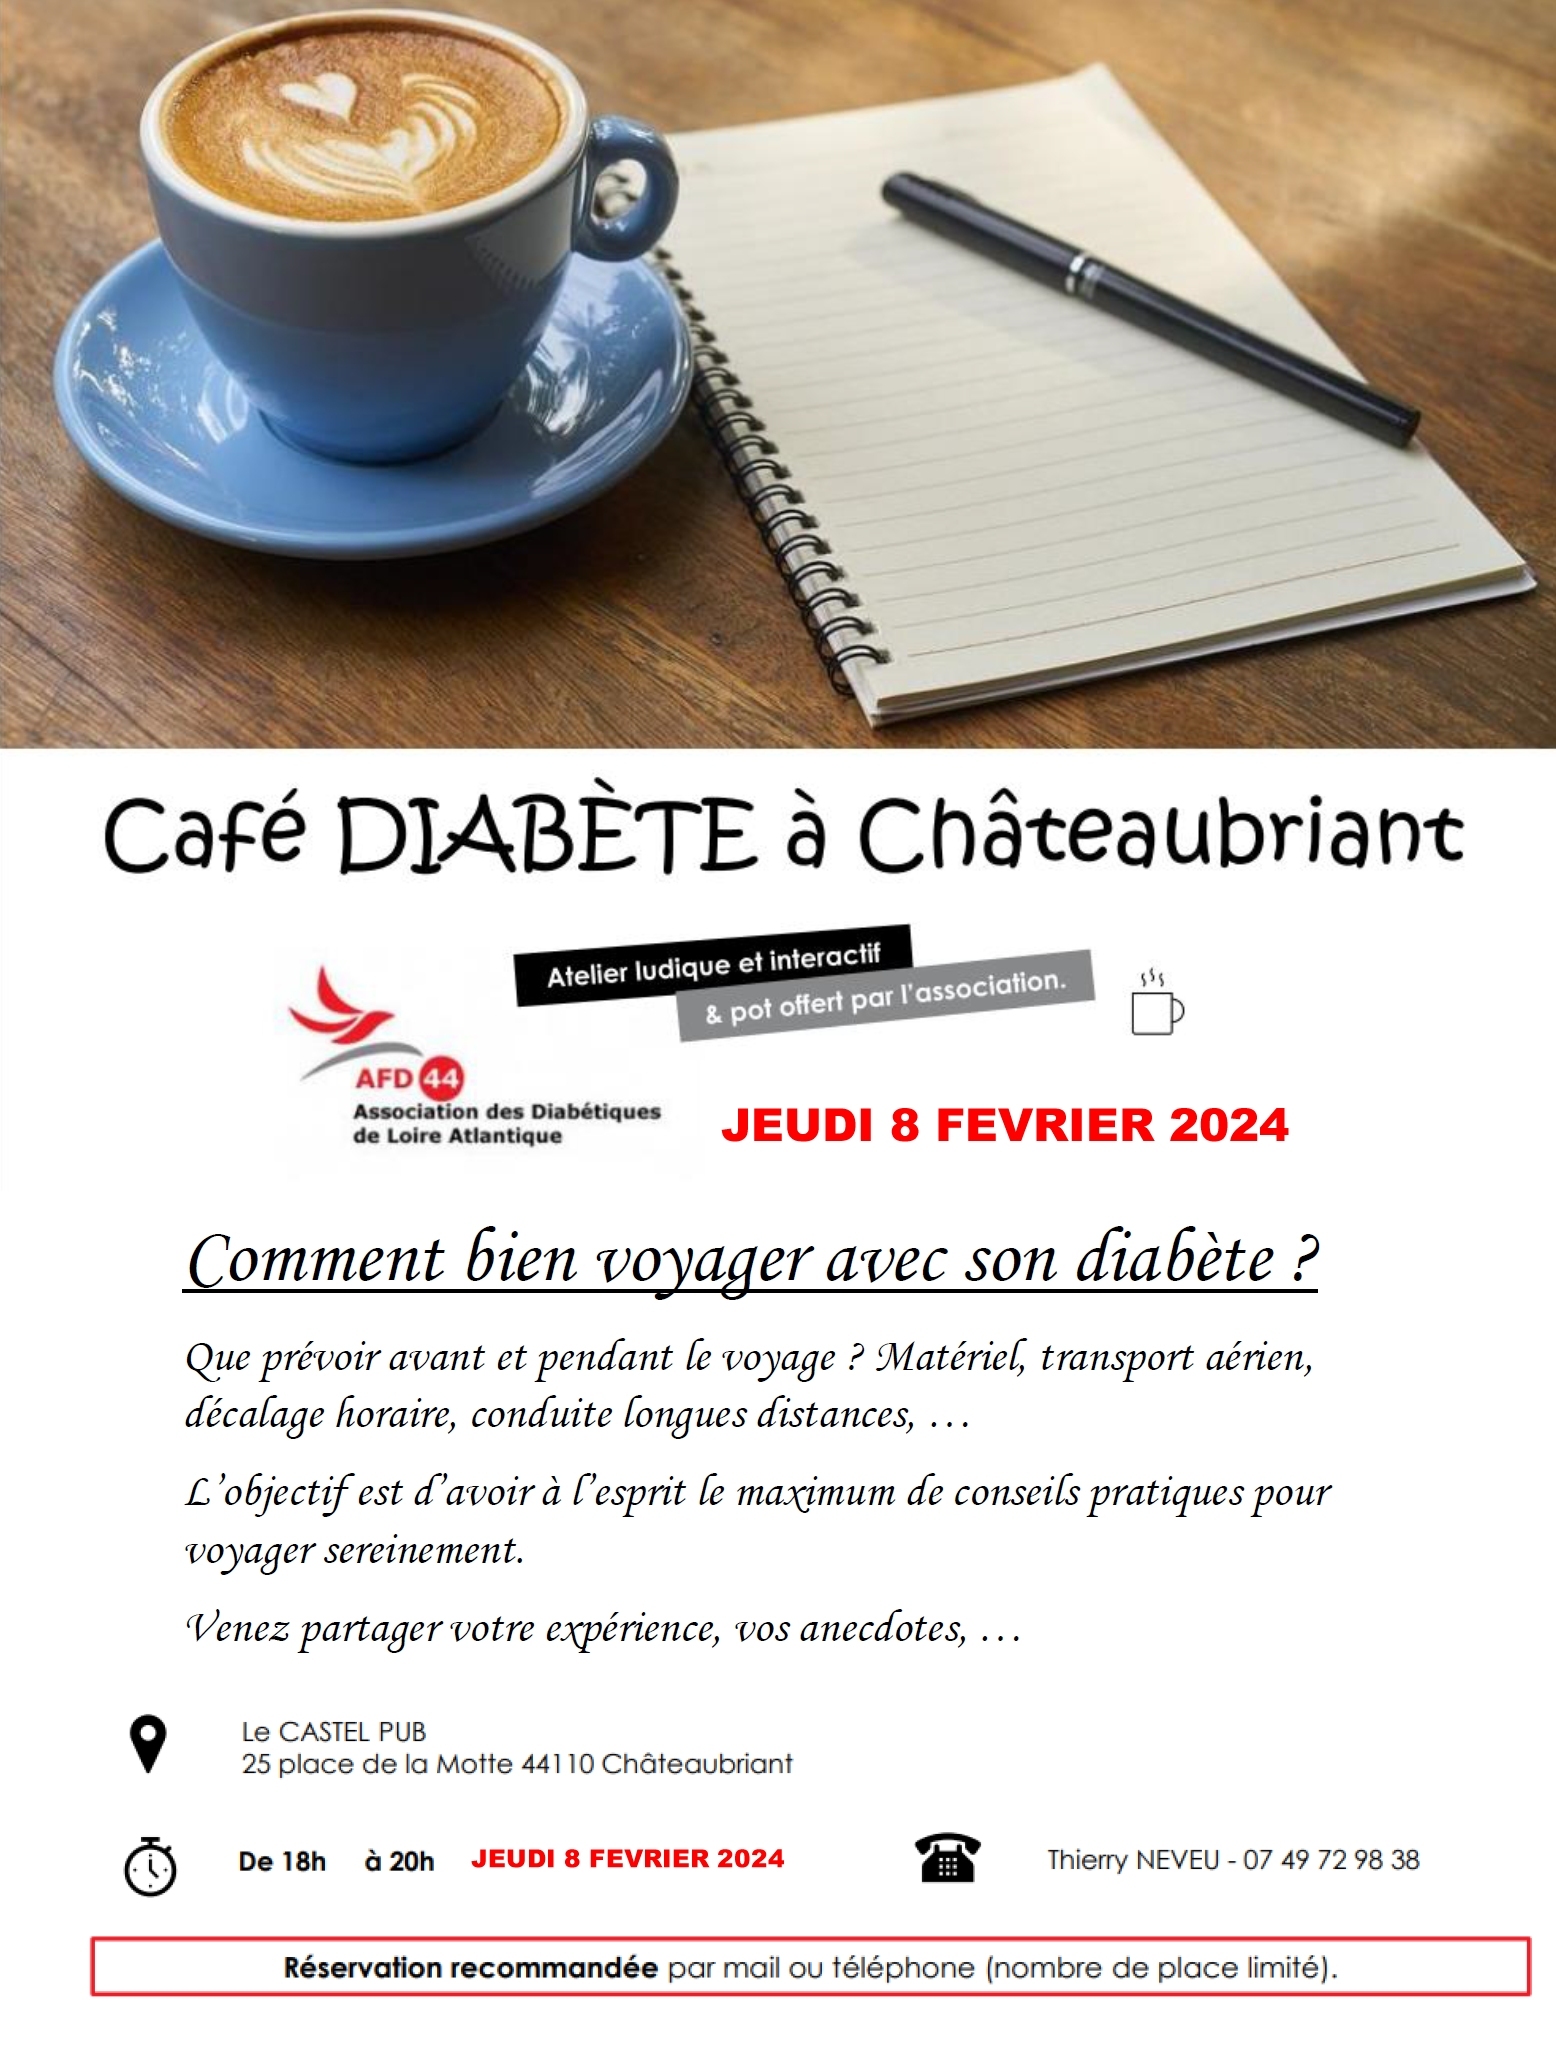 CAFE DIABETE CHATEAUBRIANT 